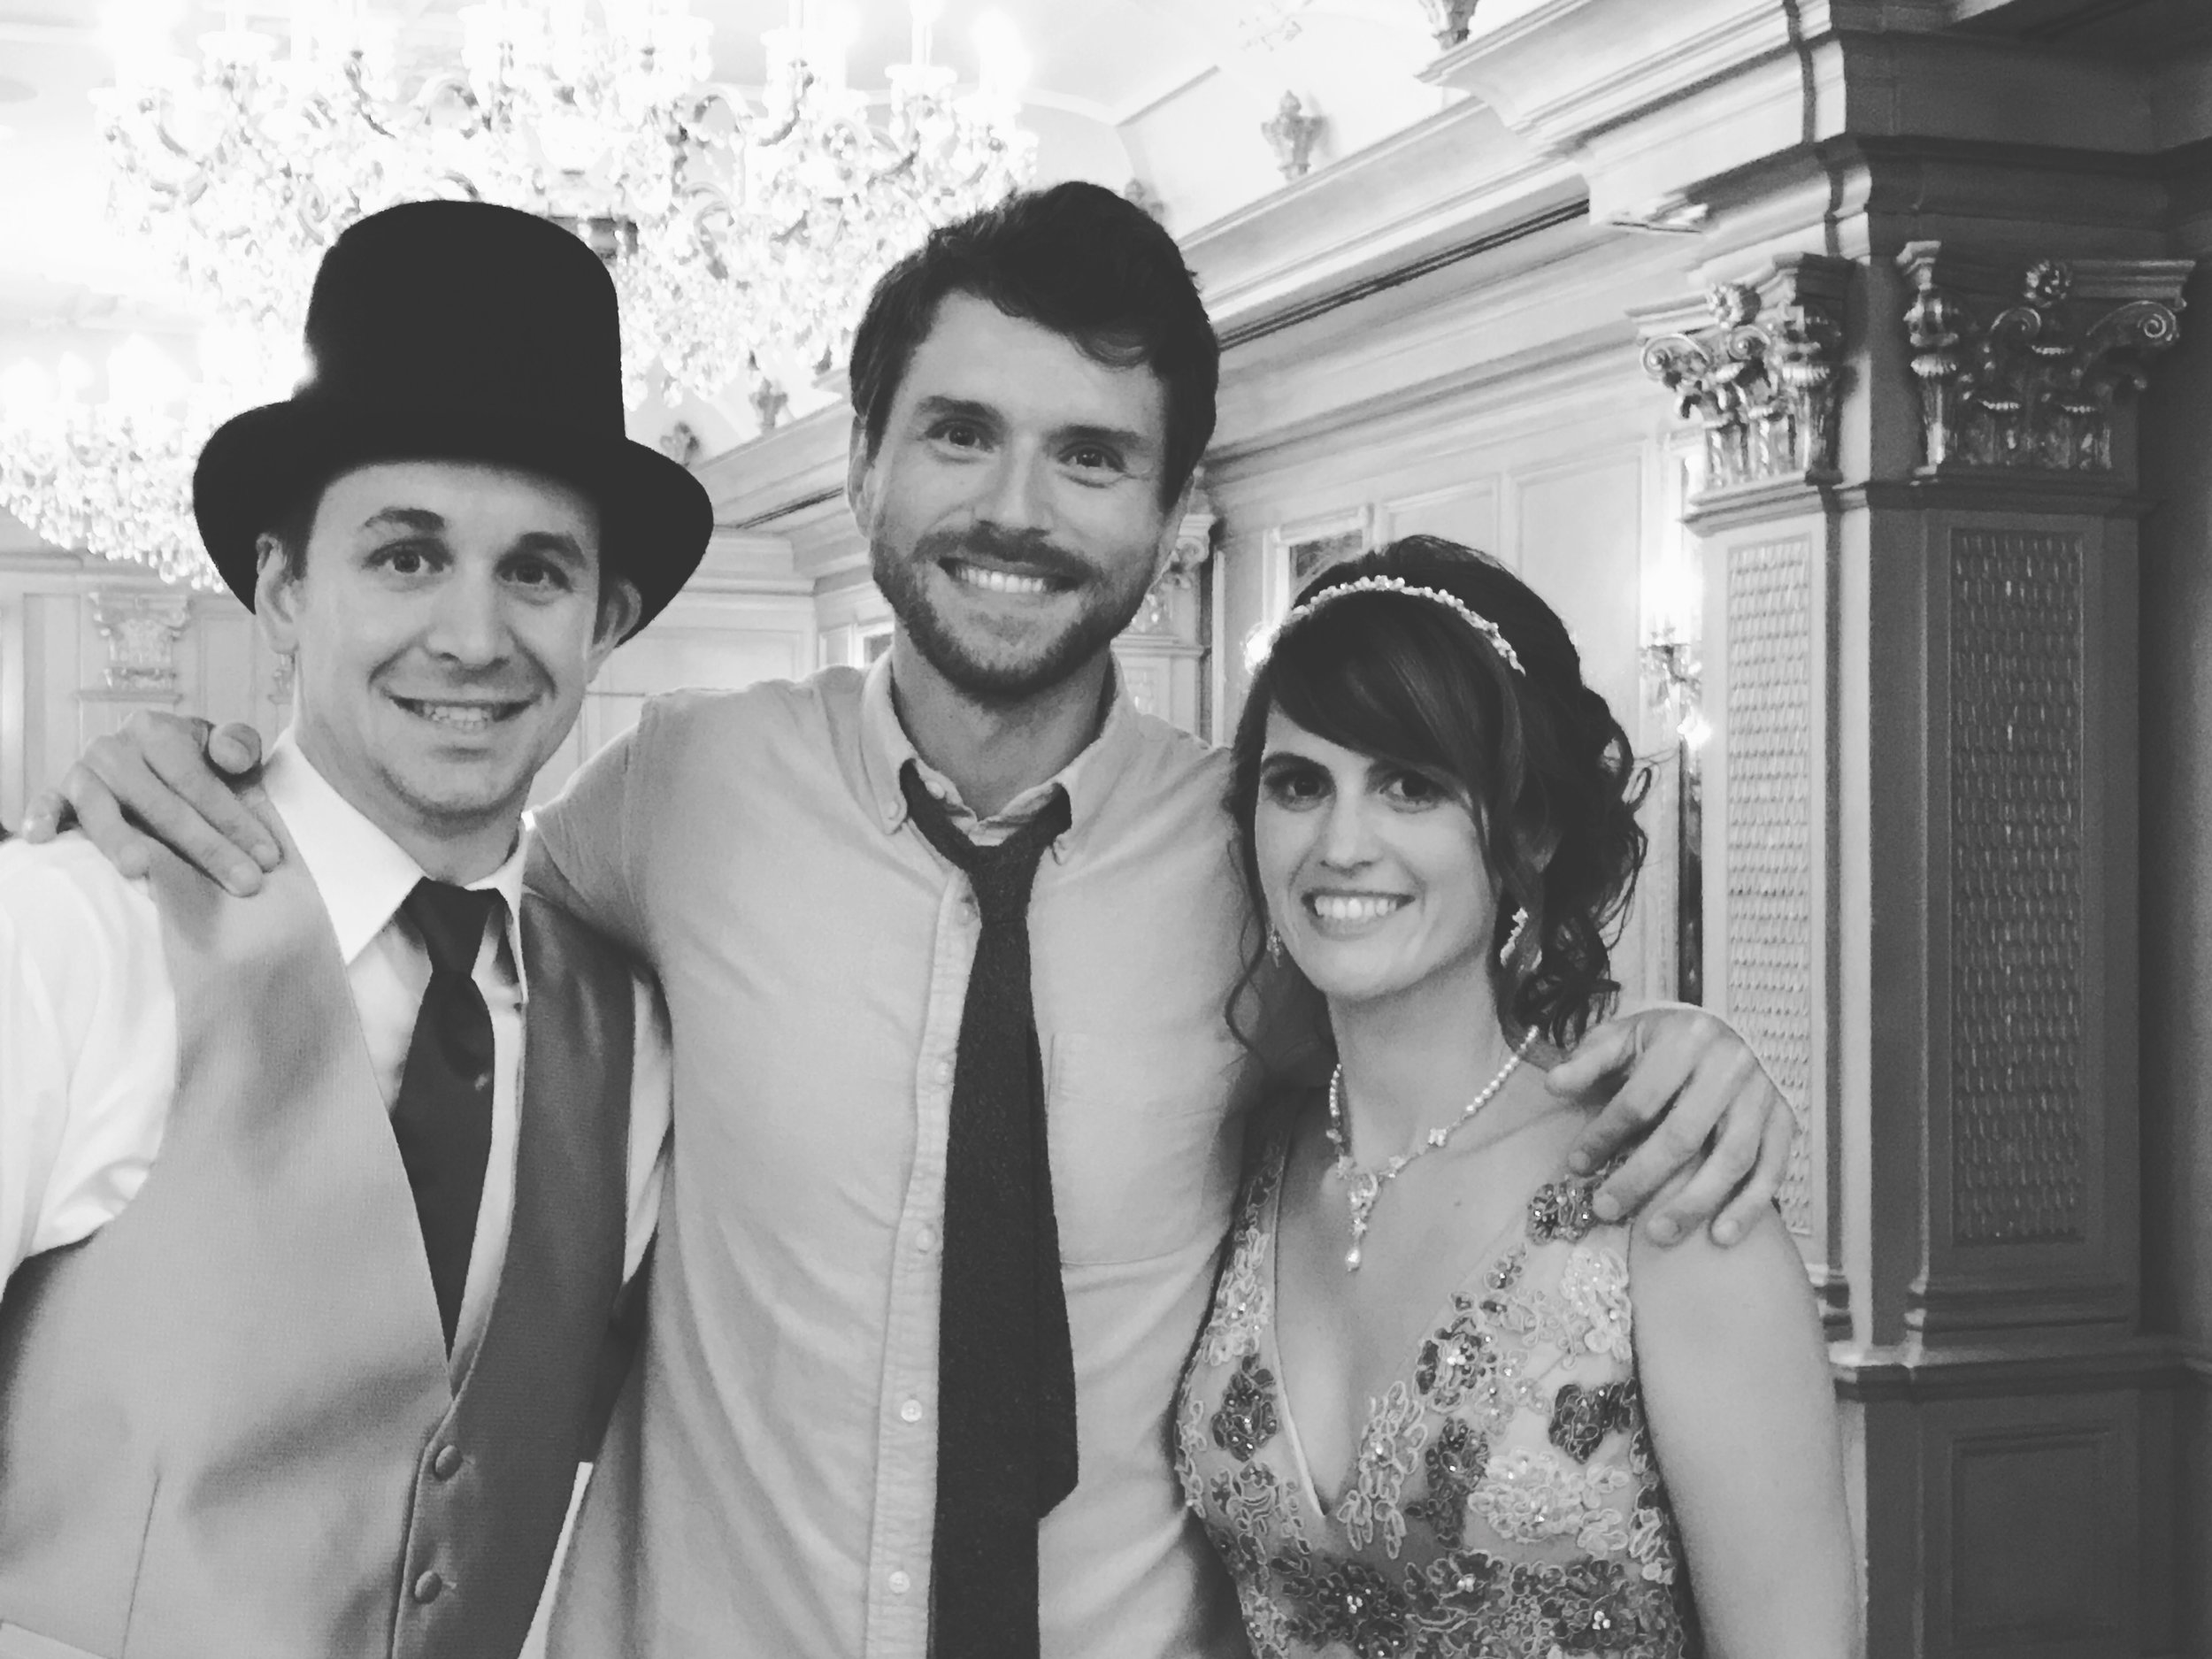 Top Hats making a comeback at wedding